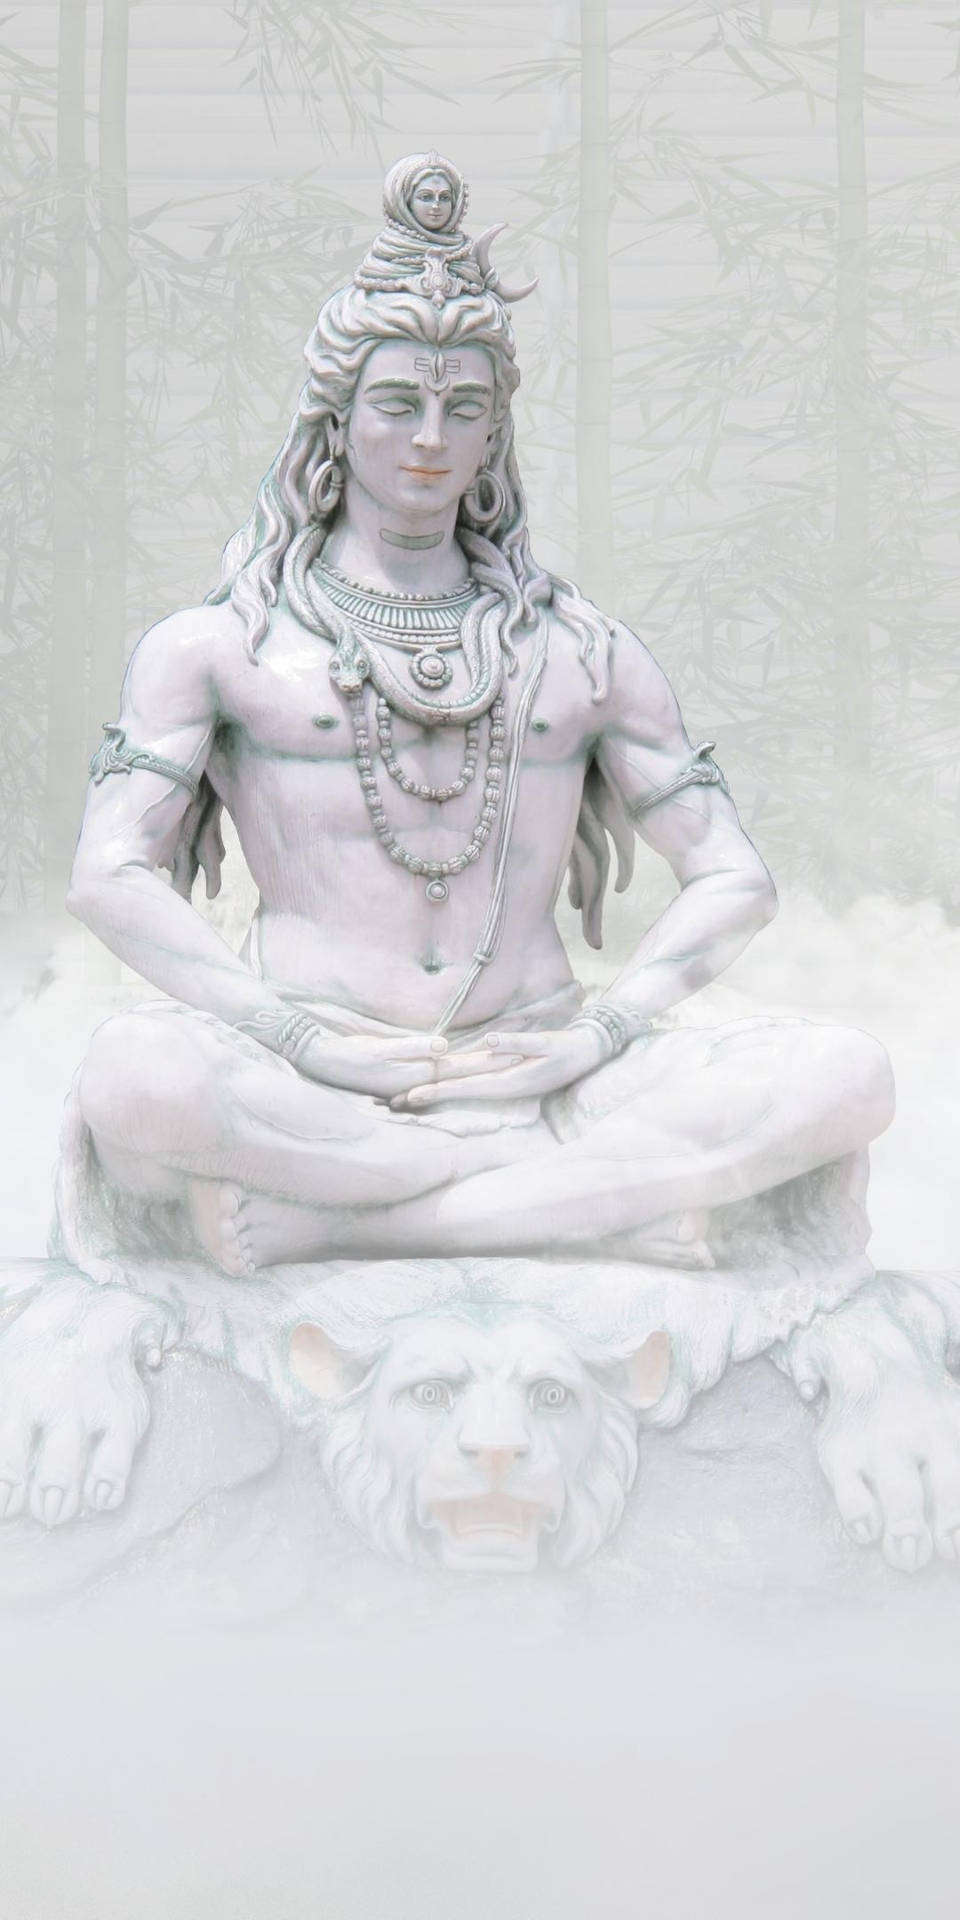 Download Lord Shiva Mobile Wallpaper